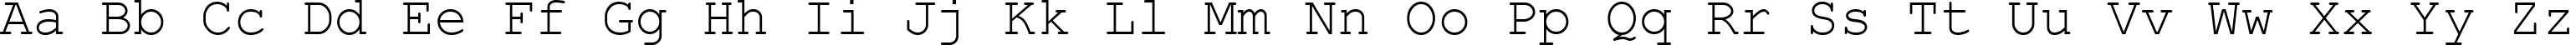 Пример написания английского алфавита шрифтом MS LineDraw